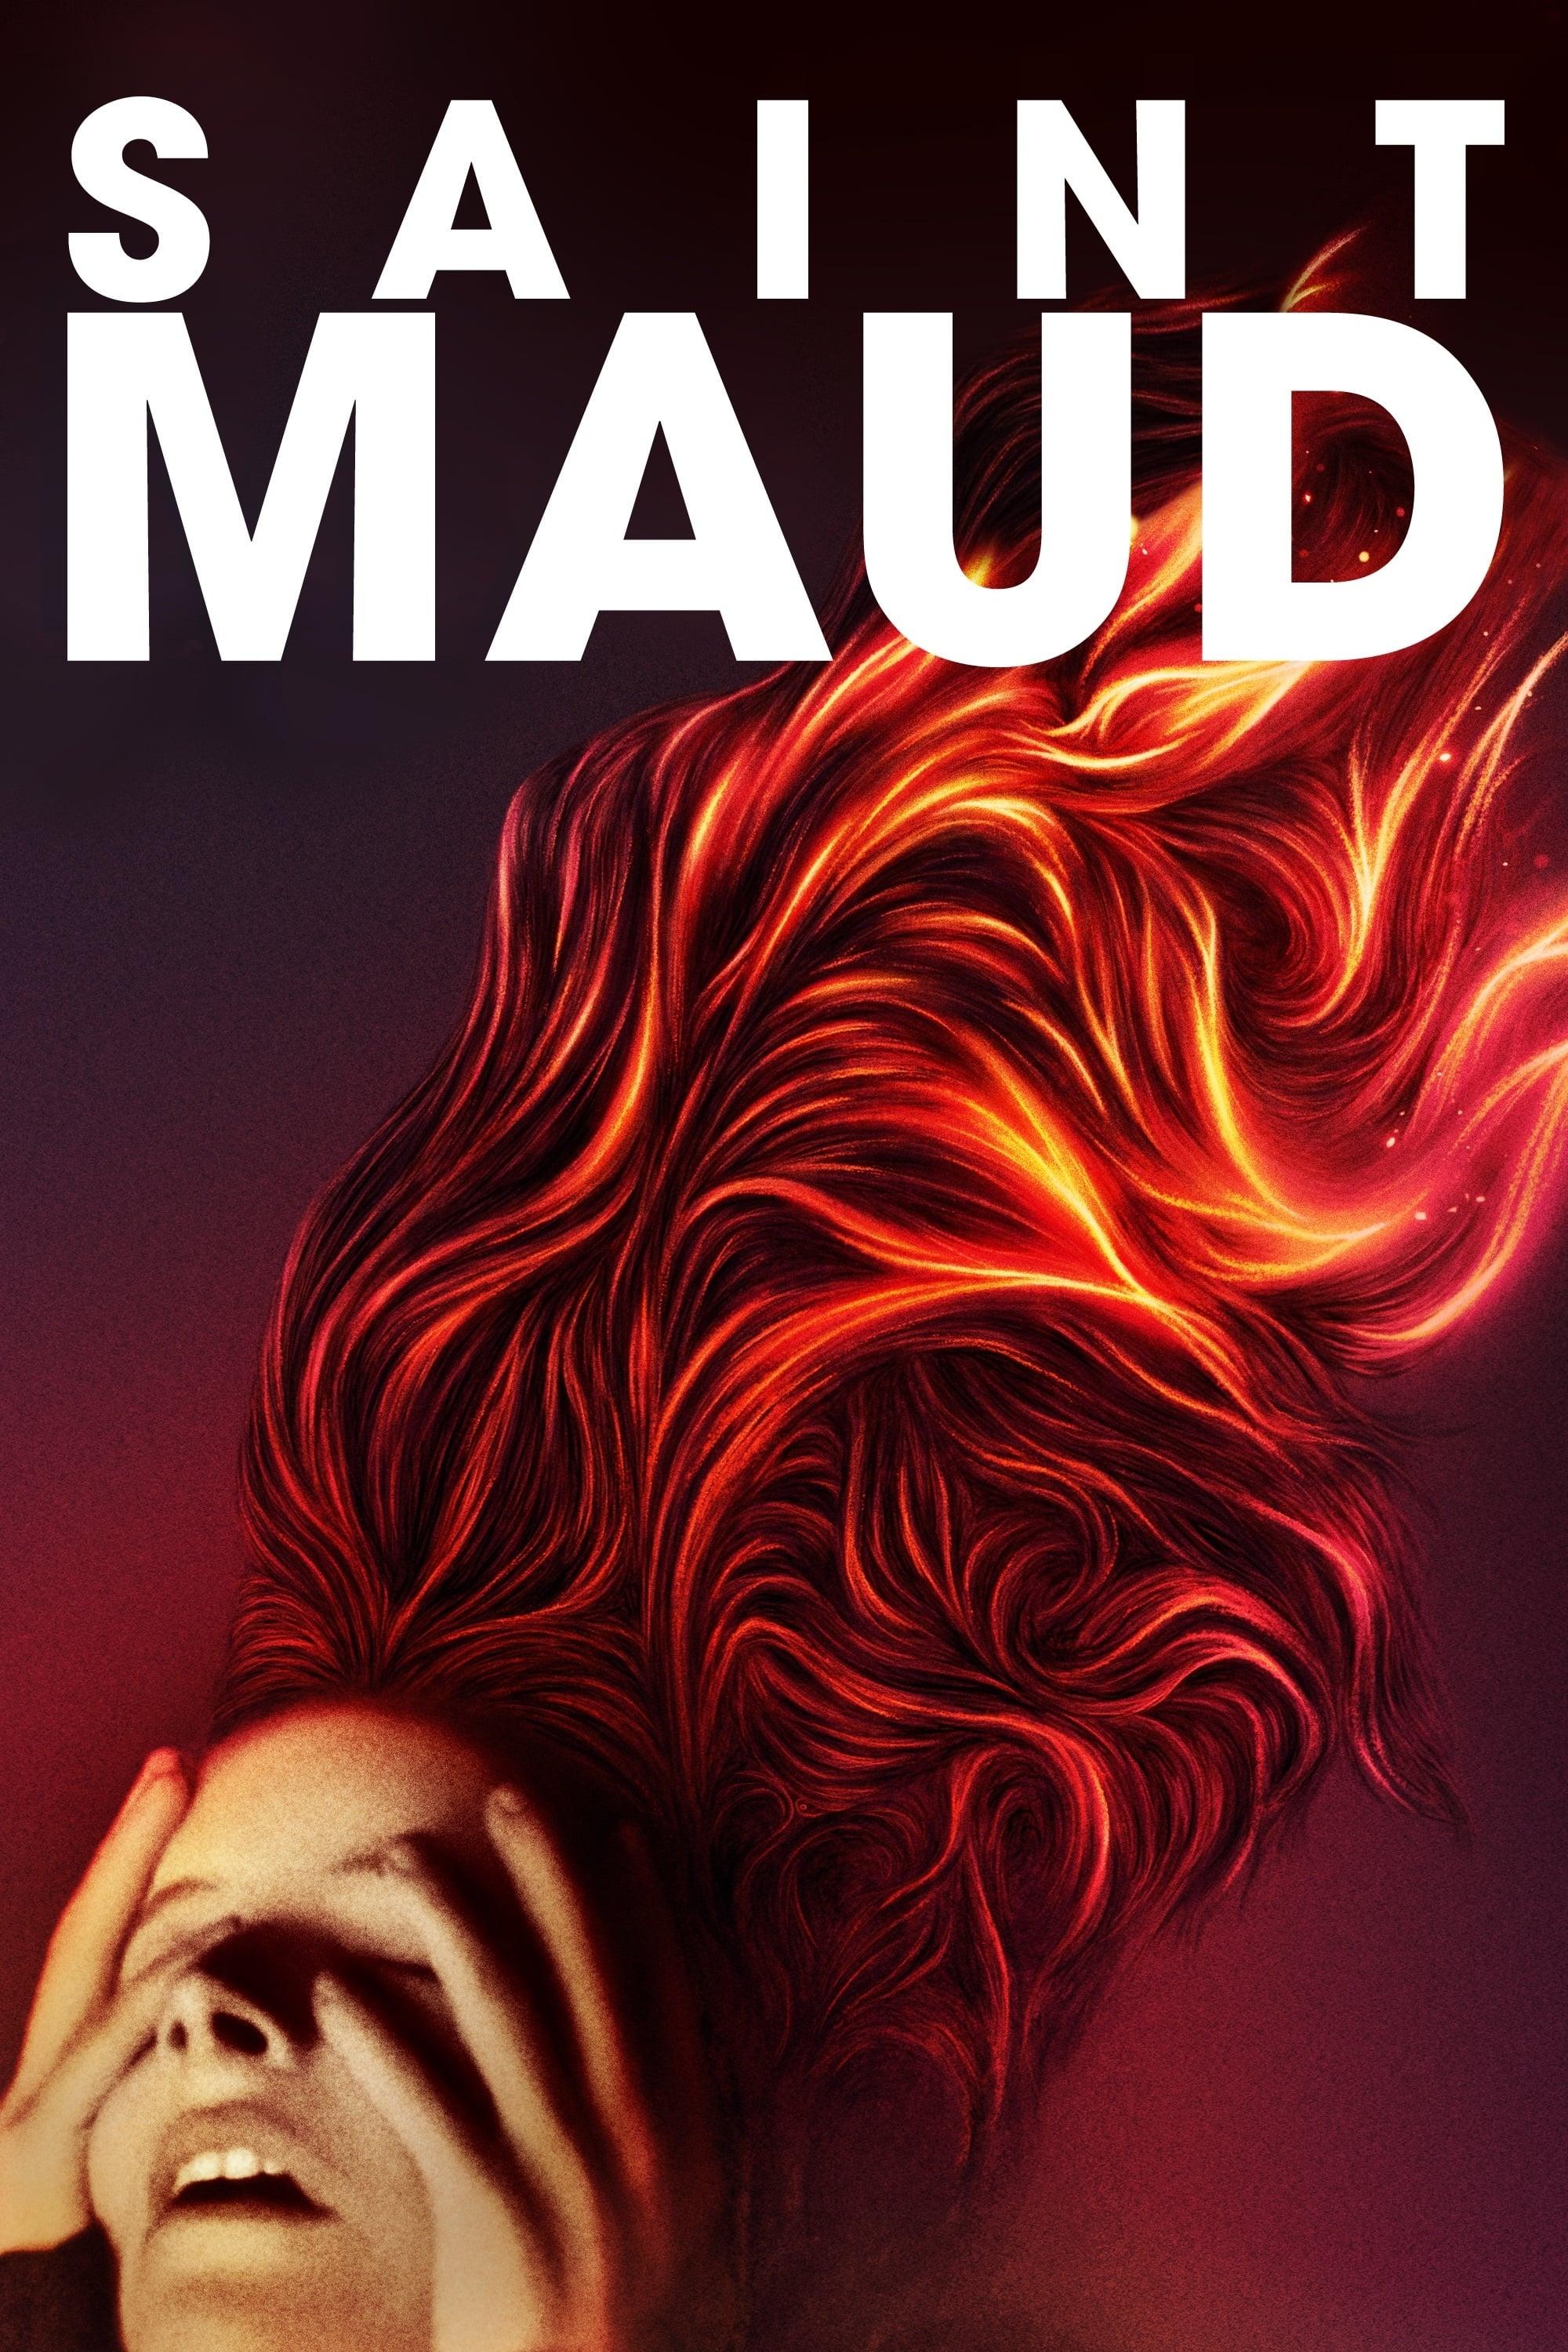 Saint Maud poster